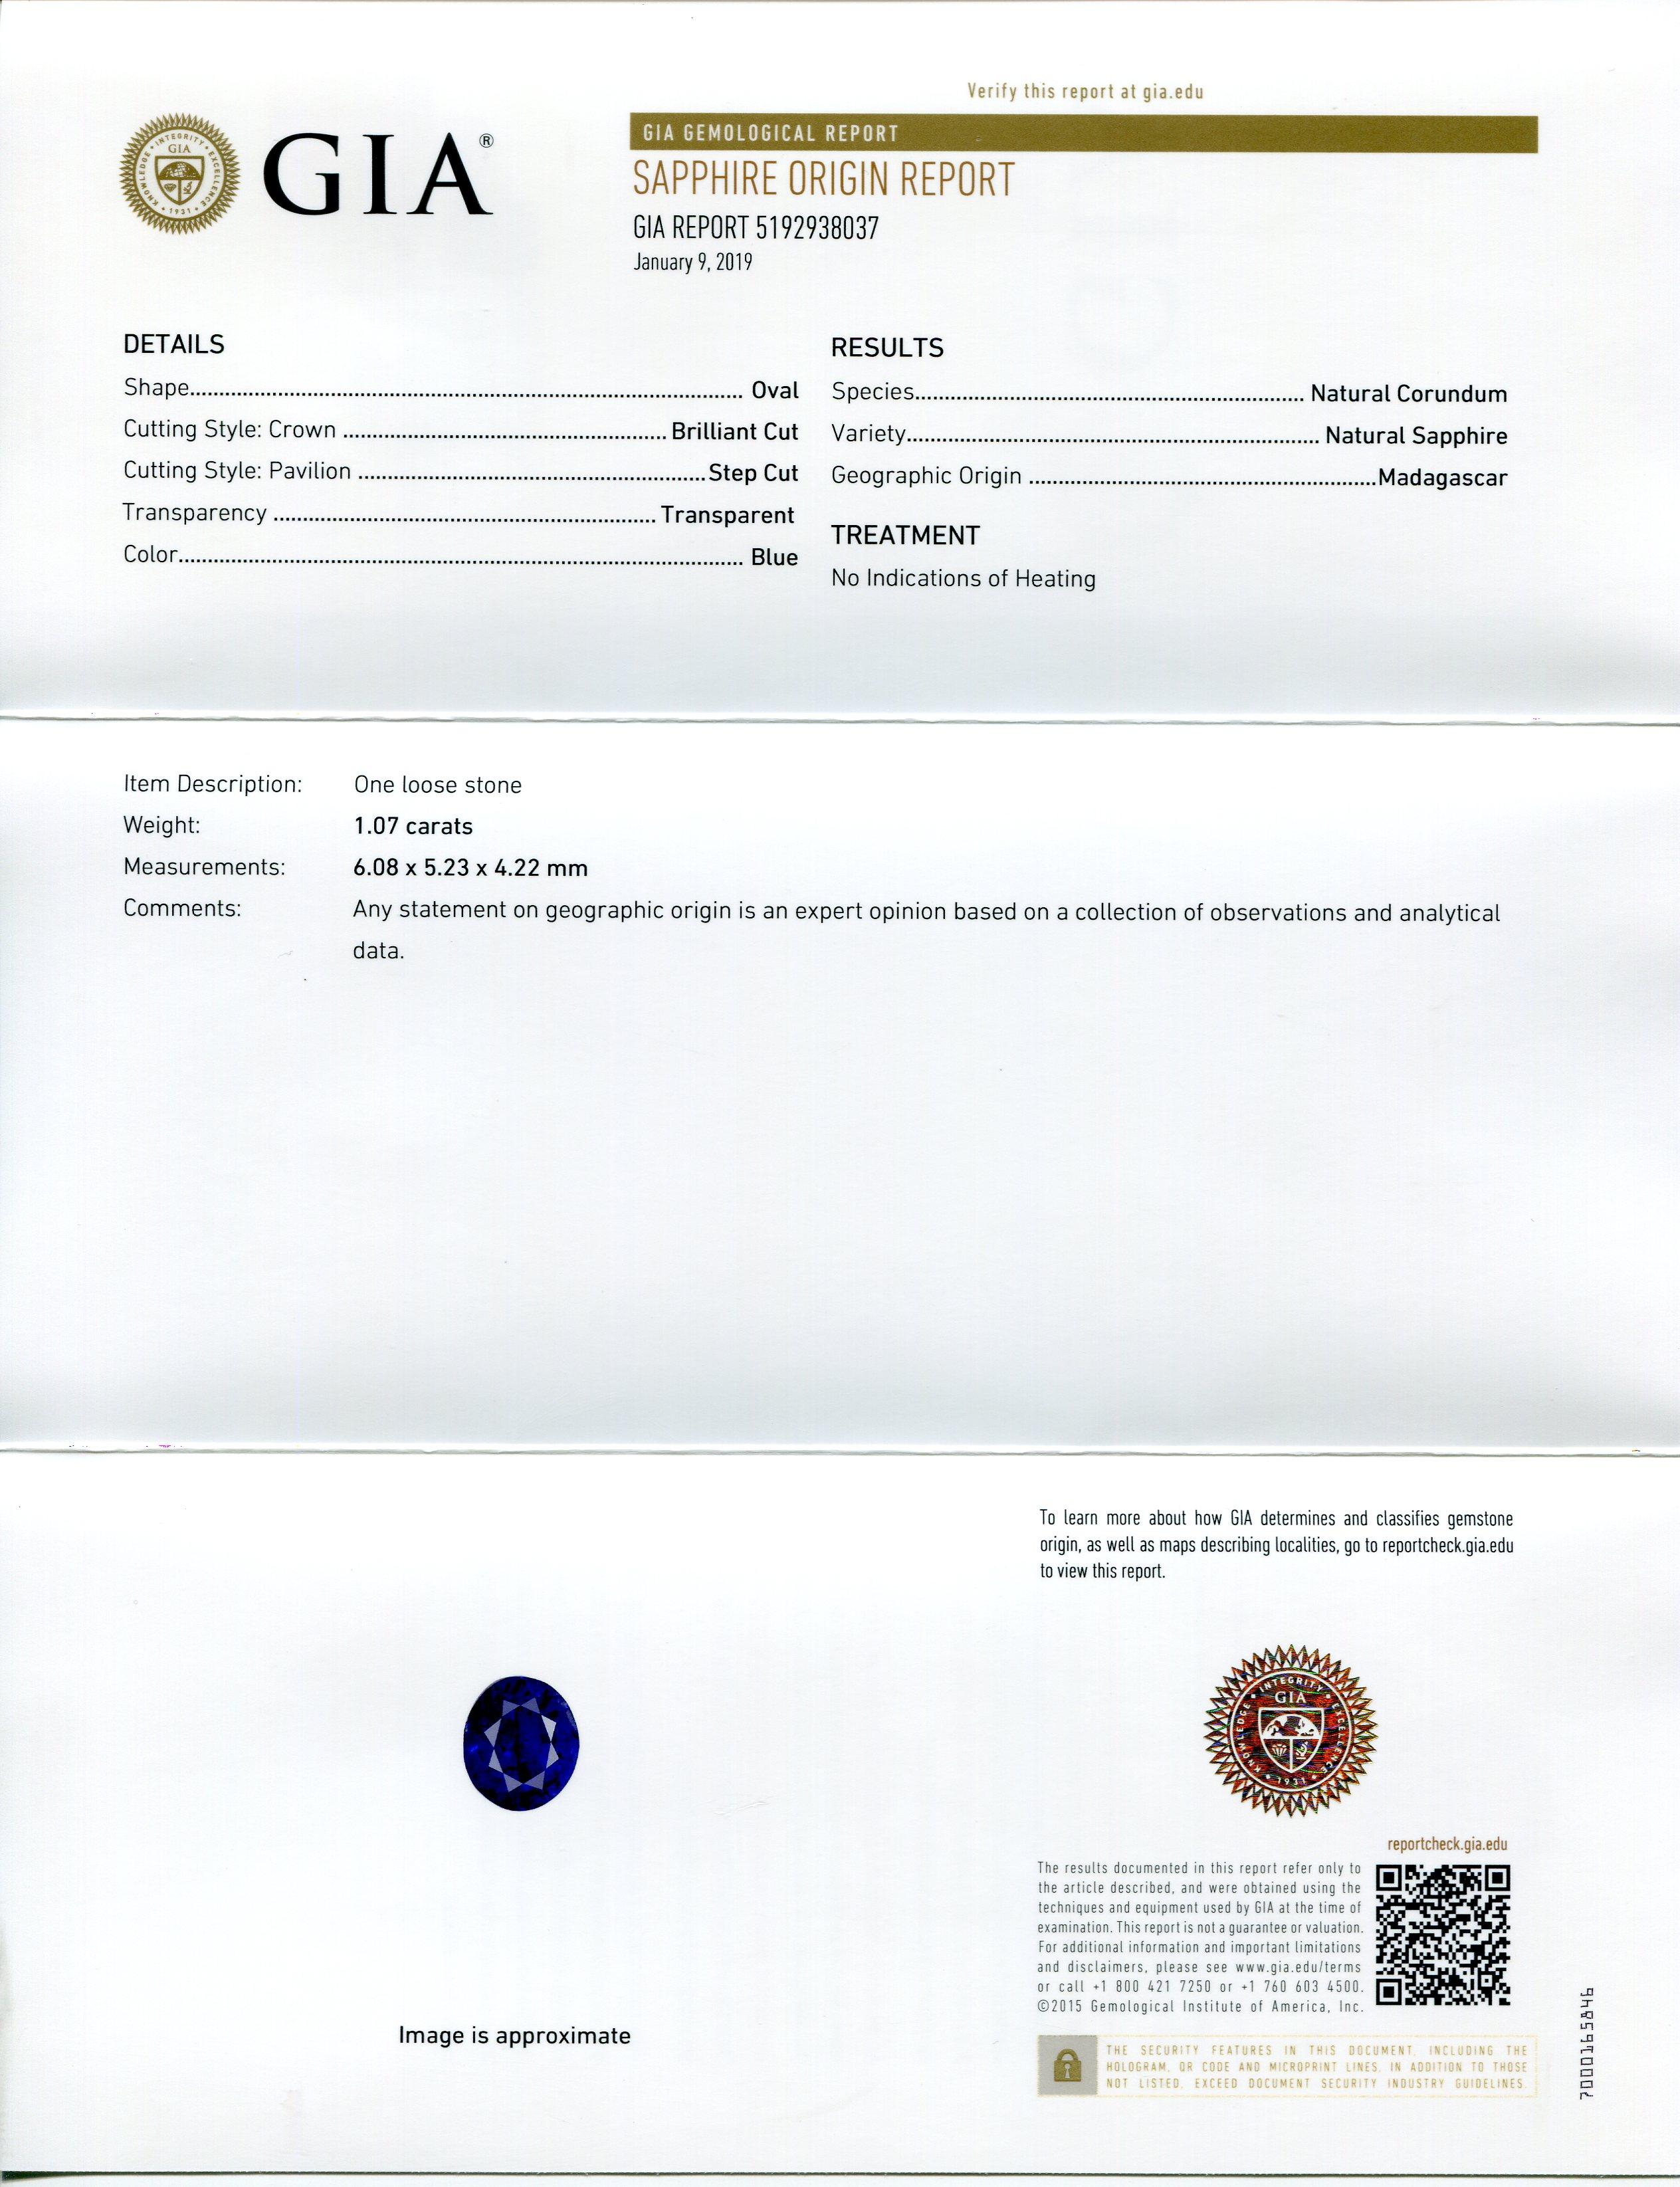  Saphir bleu ovale non chauffé de 1,07 carat certifié GIA Unisexe 